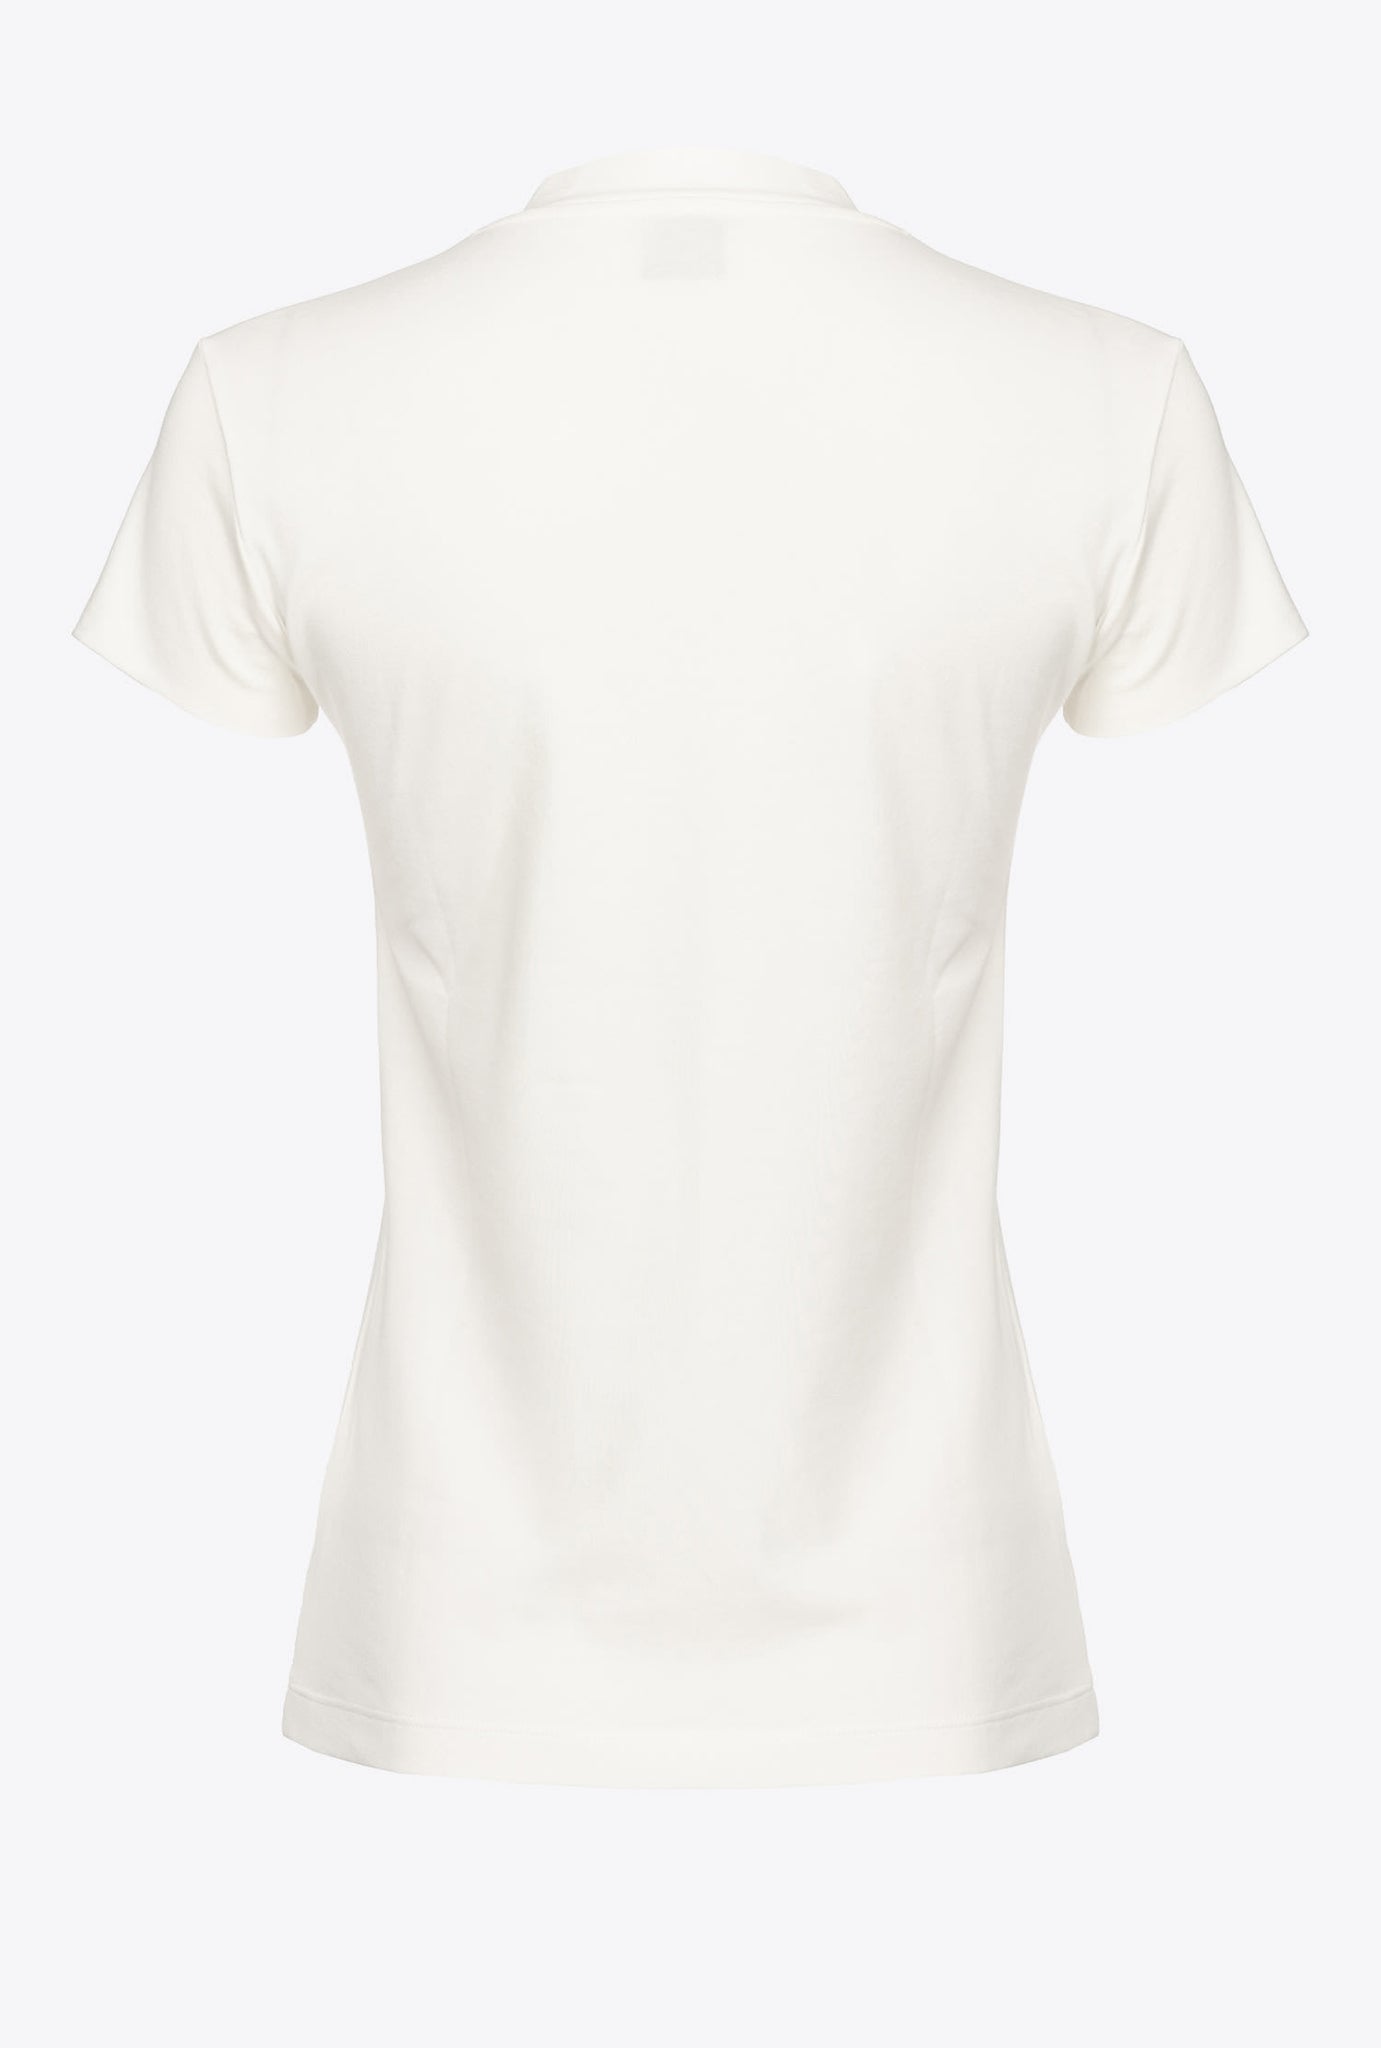 T-Shirt gioiello Pinko / Bianco - Ideal Moda